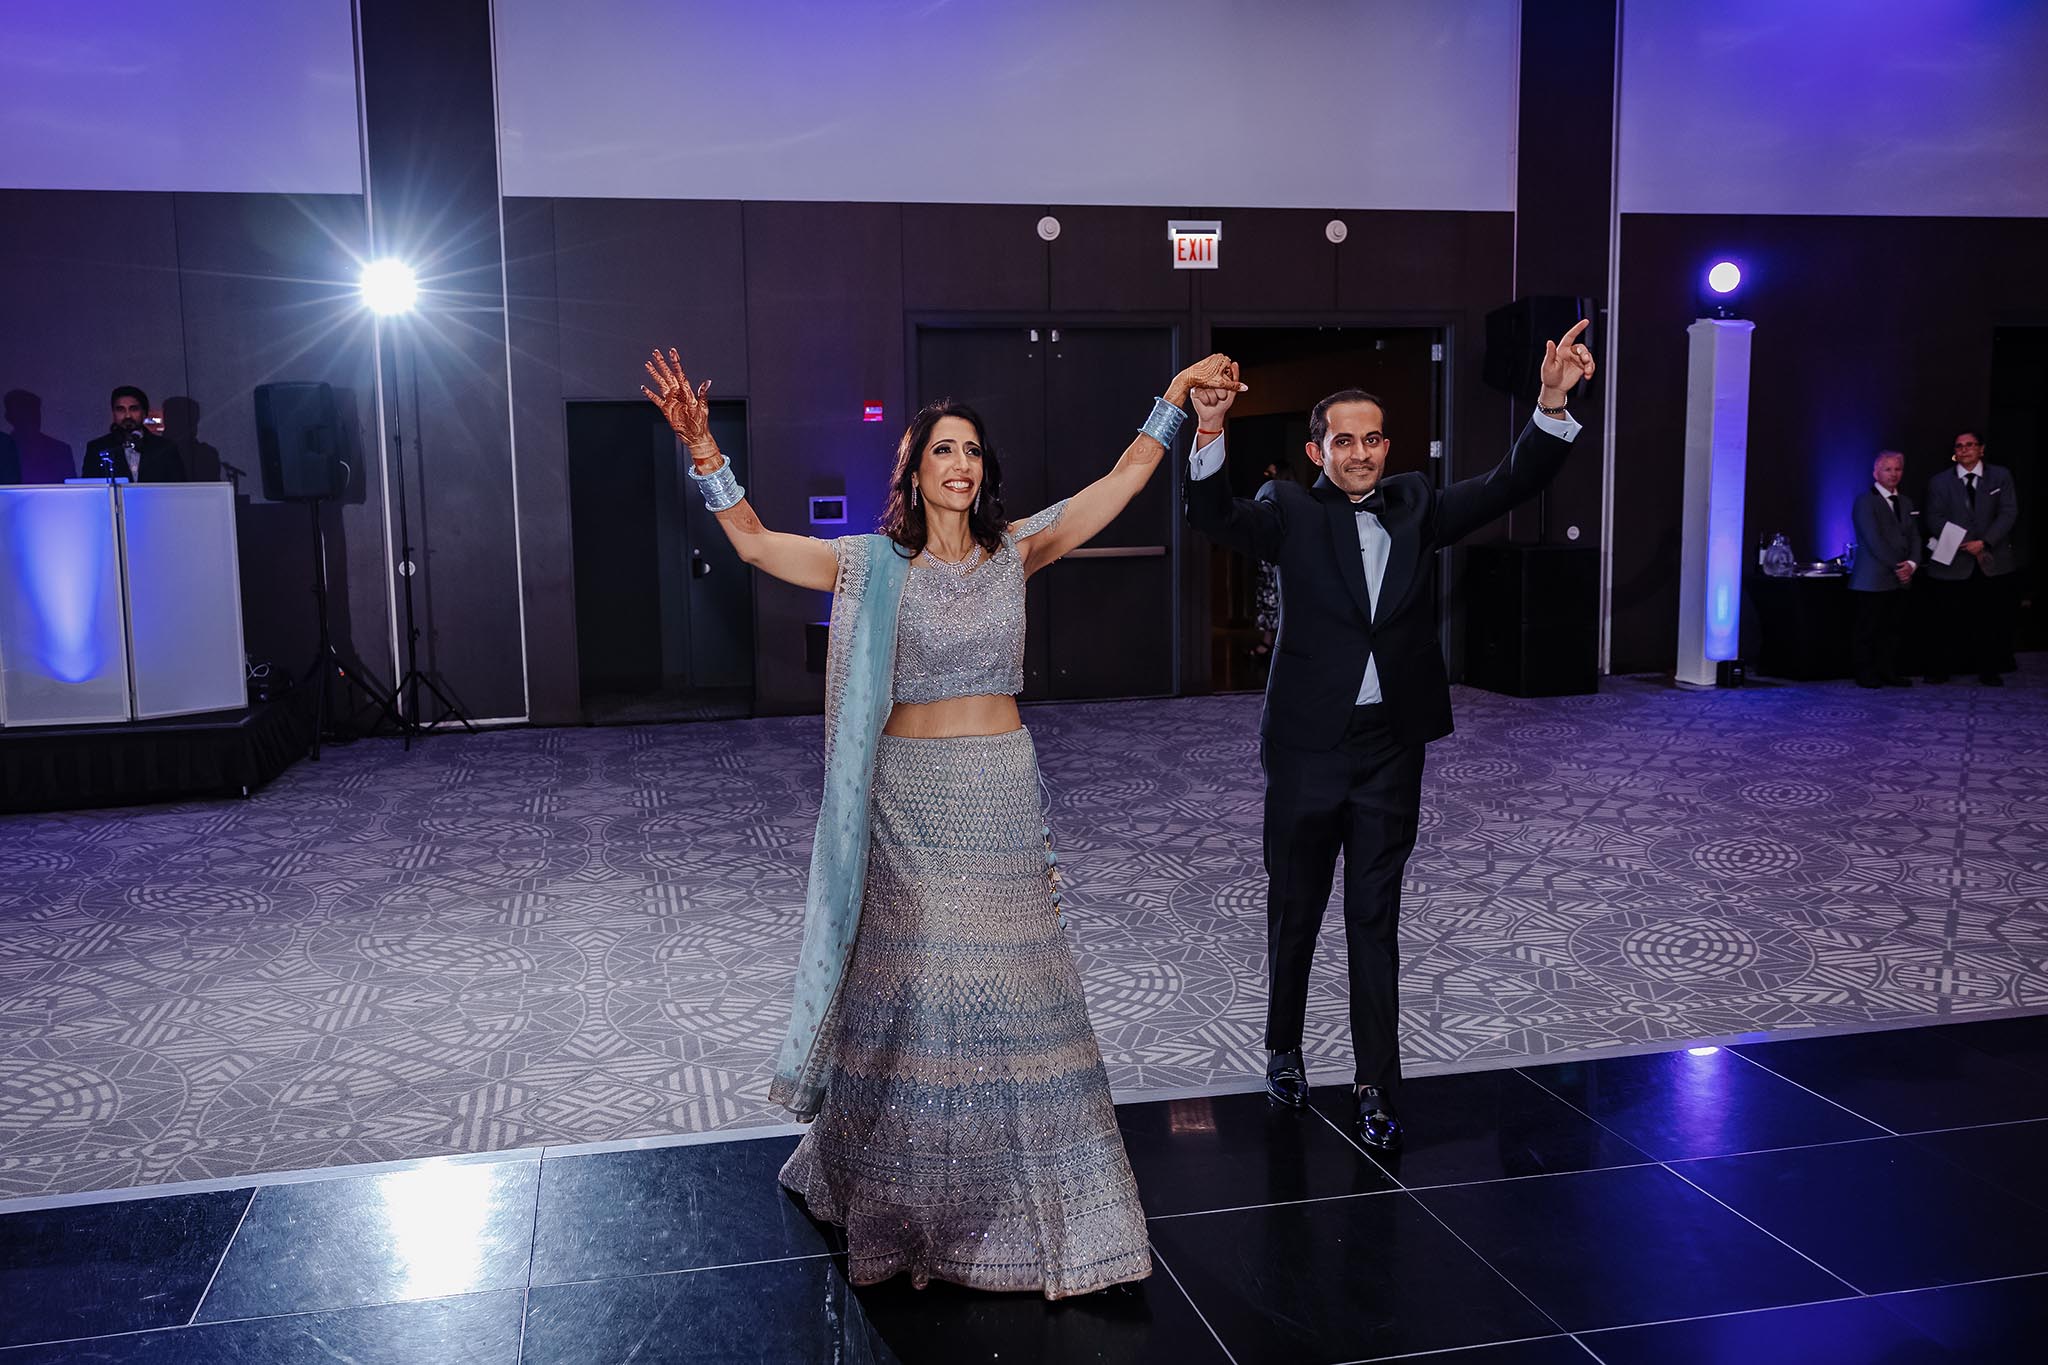 Radisson Blu Aqua Chicago Indian wedding